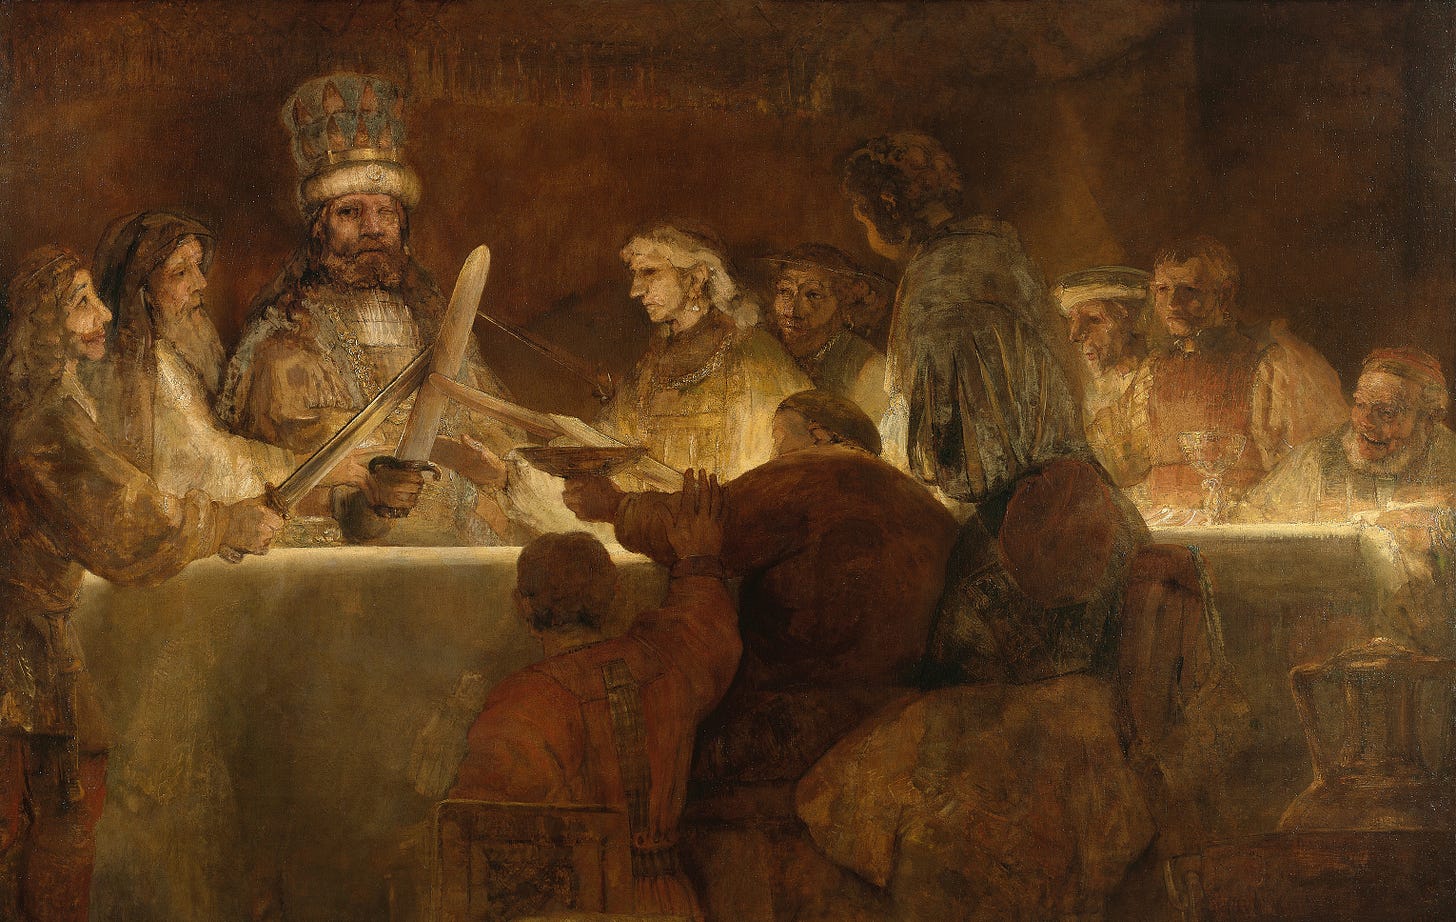 The Conspiracy of the Batavians under Claudius Civilis by Rembrandt van Rijn